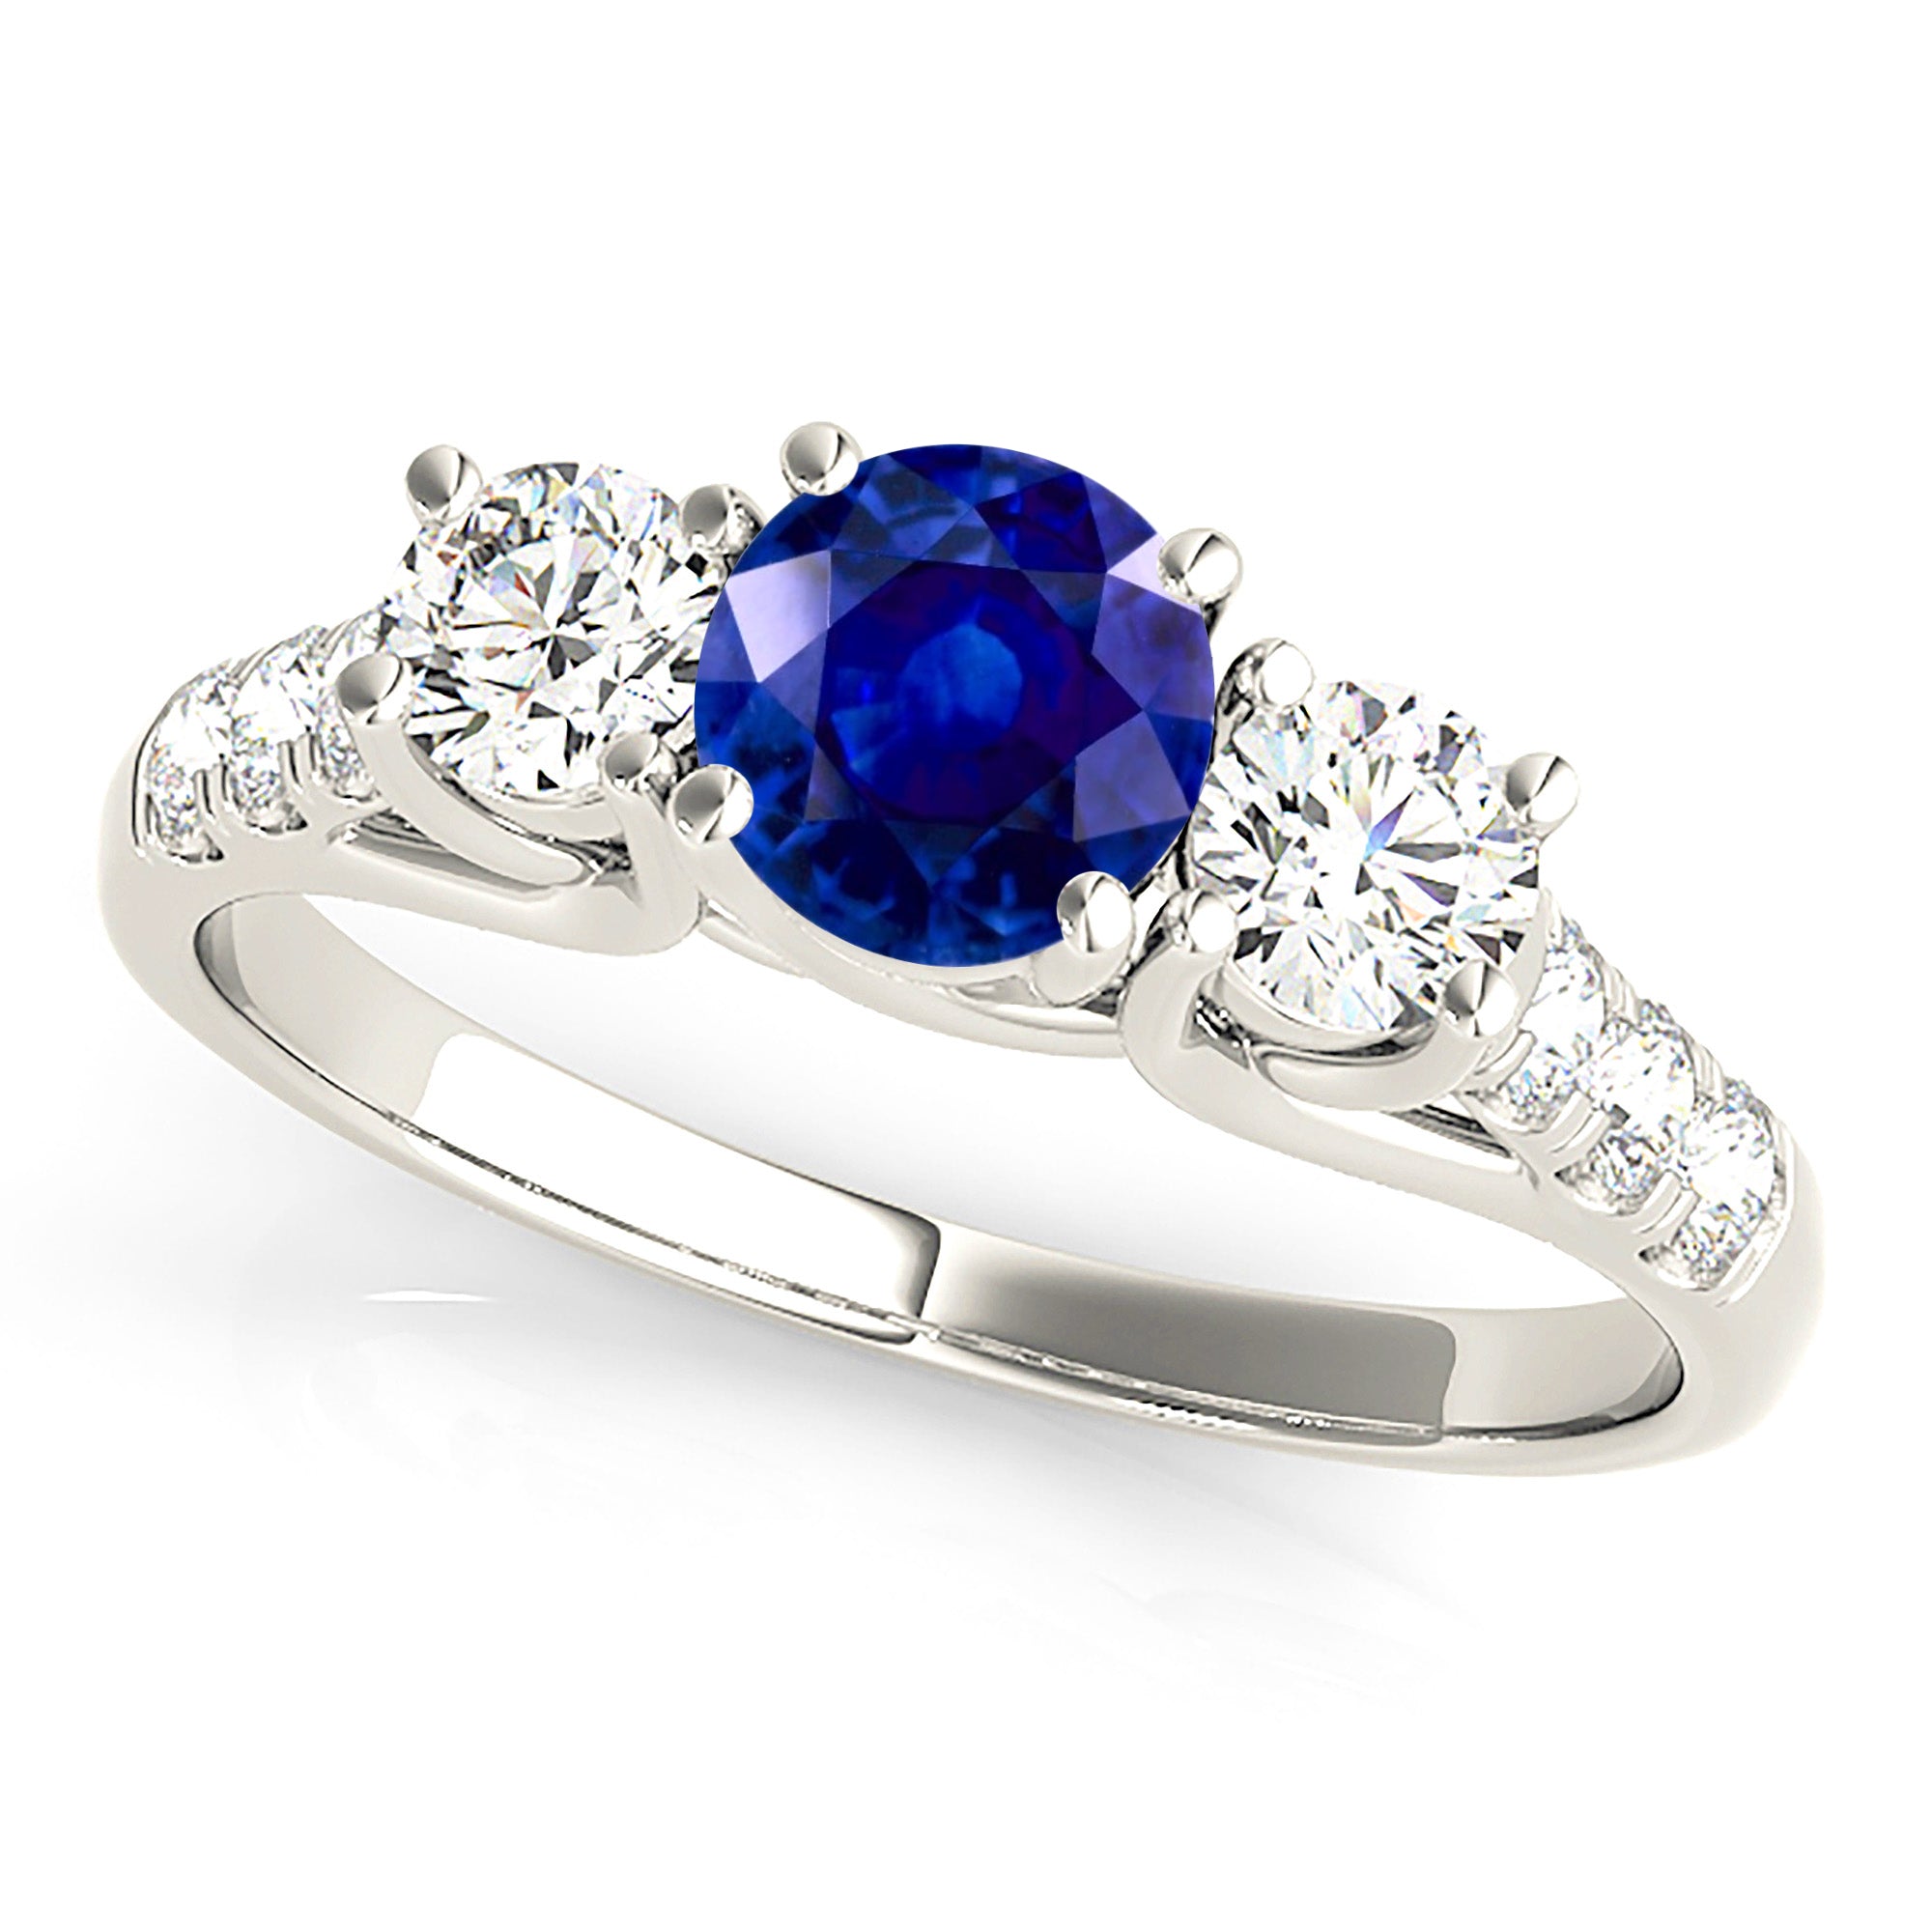 1.35 ct. Genuine Blue Sapphire Three Stone Ring With 0.55 ctw. Side Diamonds-in 14K/18K White, Yellow, Rose Gold and Platinum - Christmas Jewelry Gift -VIRABYANI